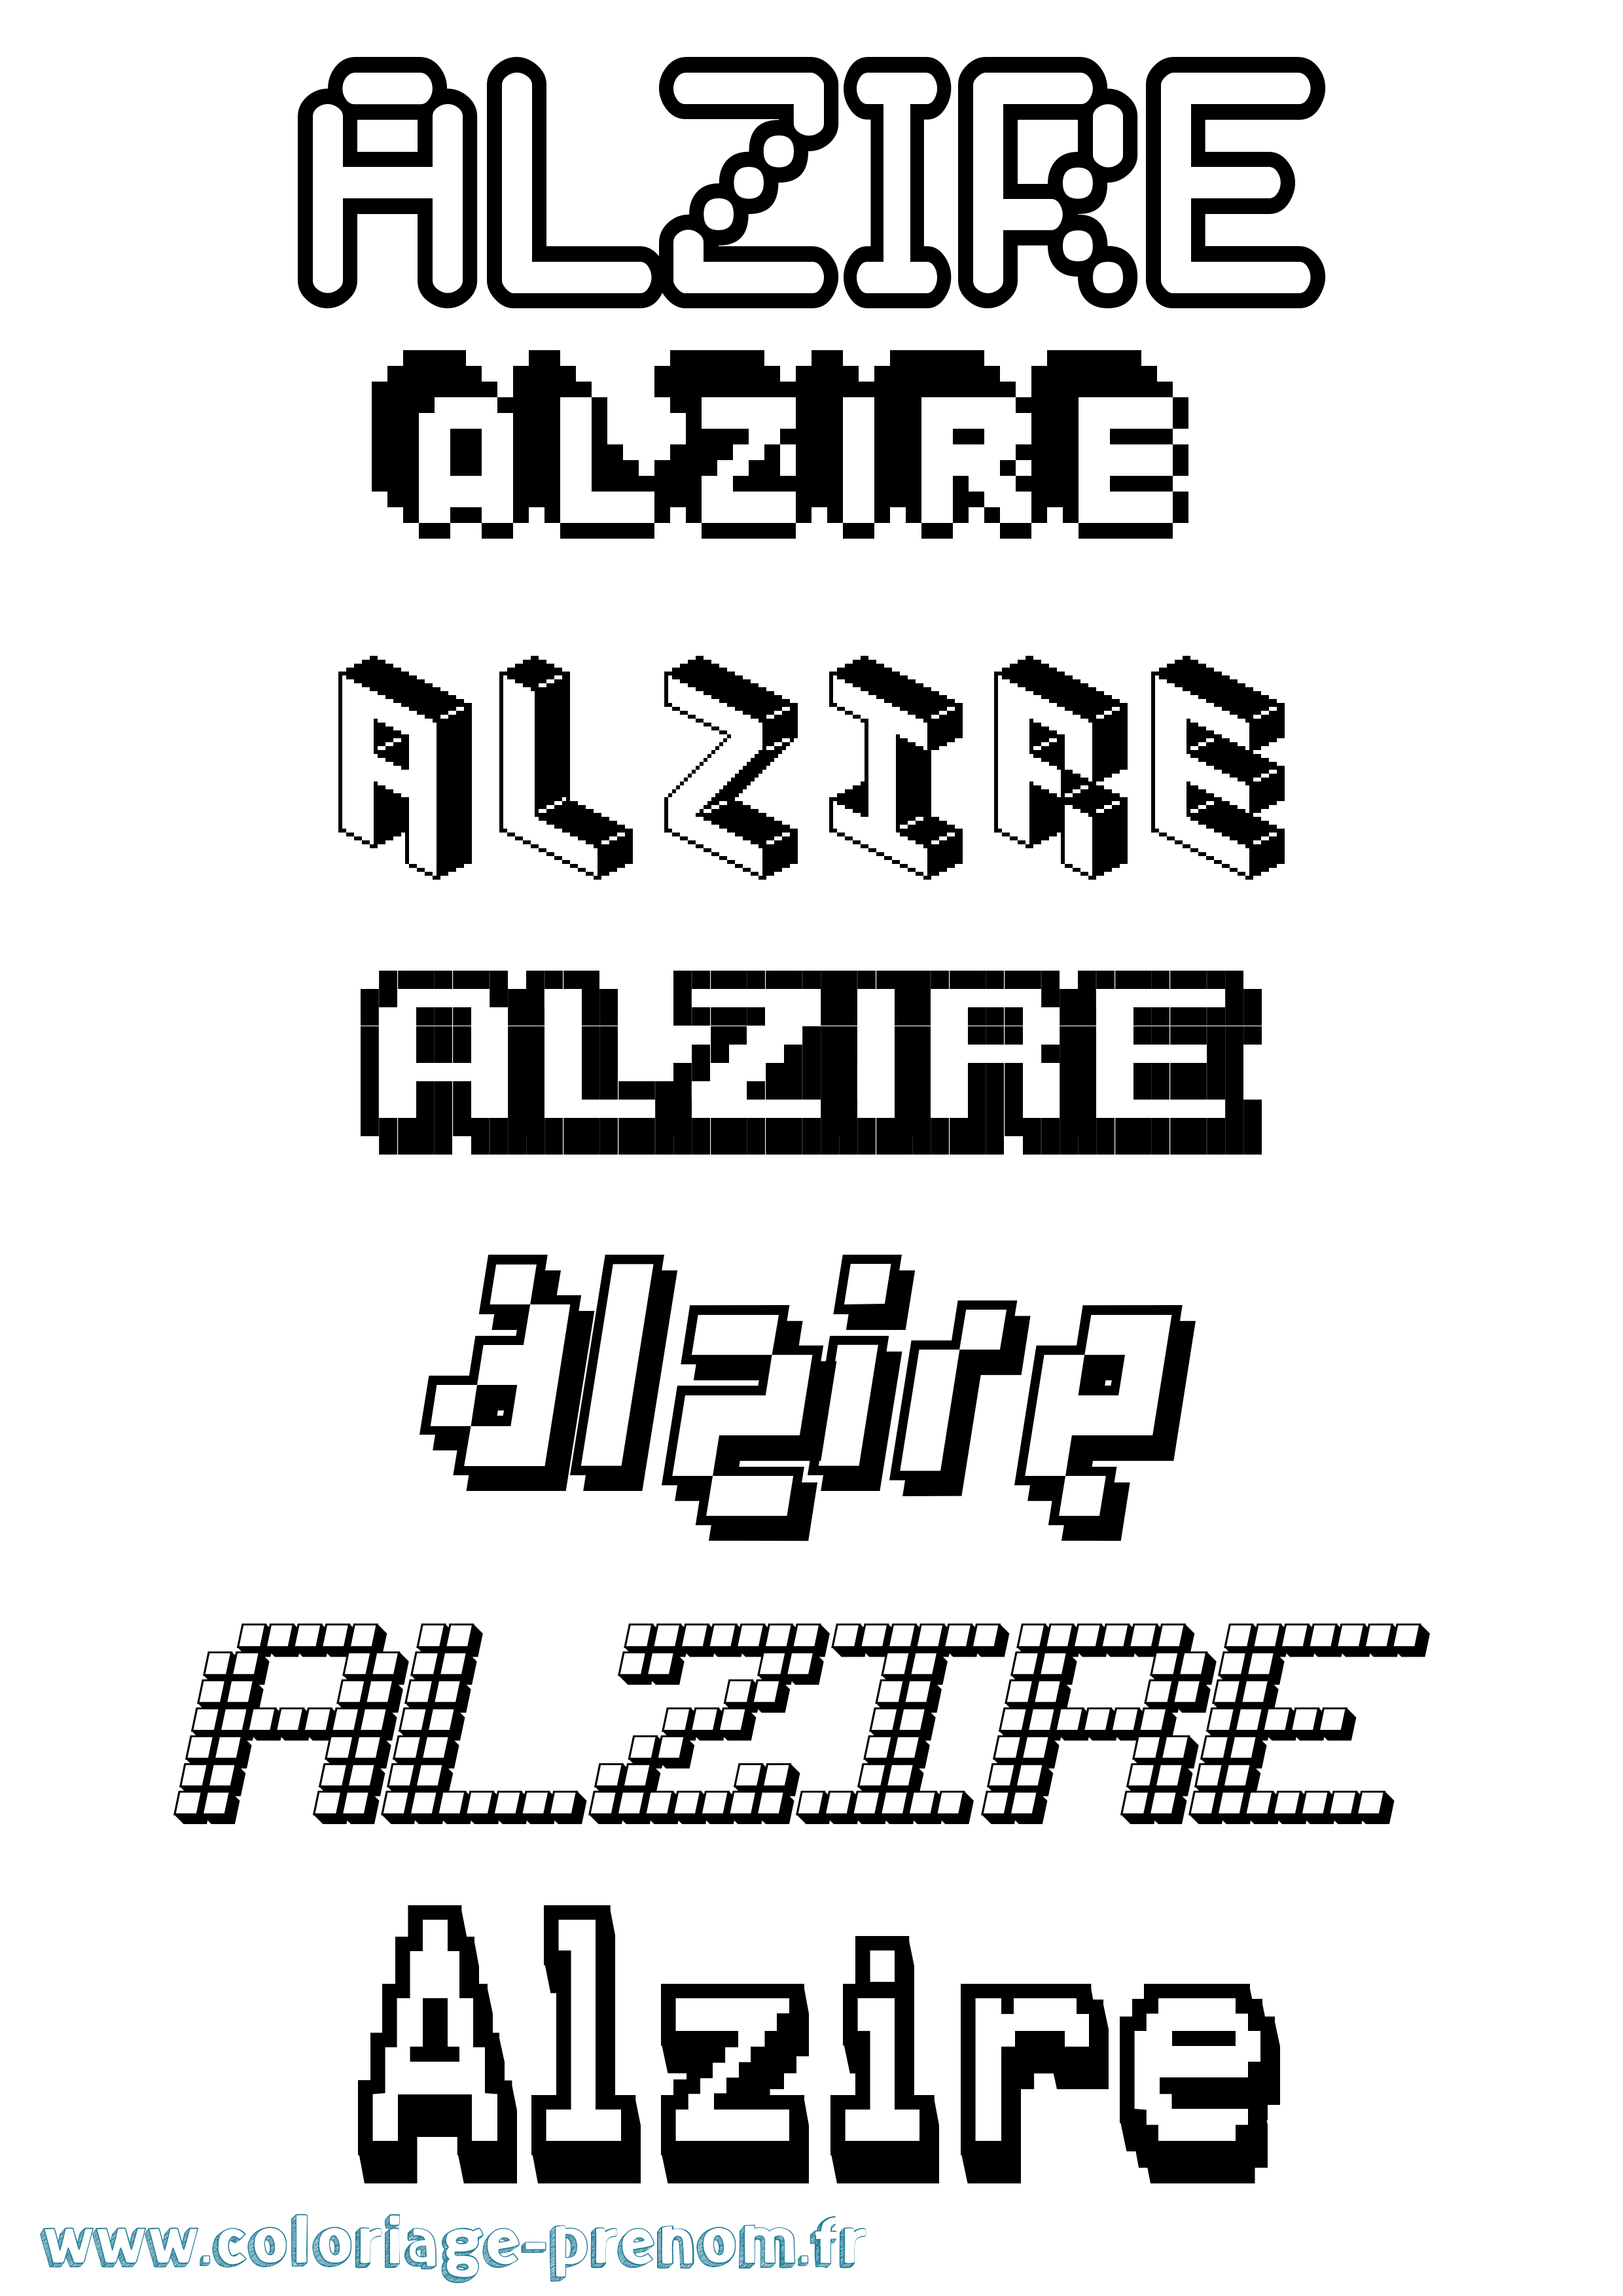 Coloriage prénom Alzire Pixel